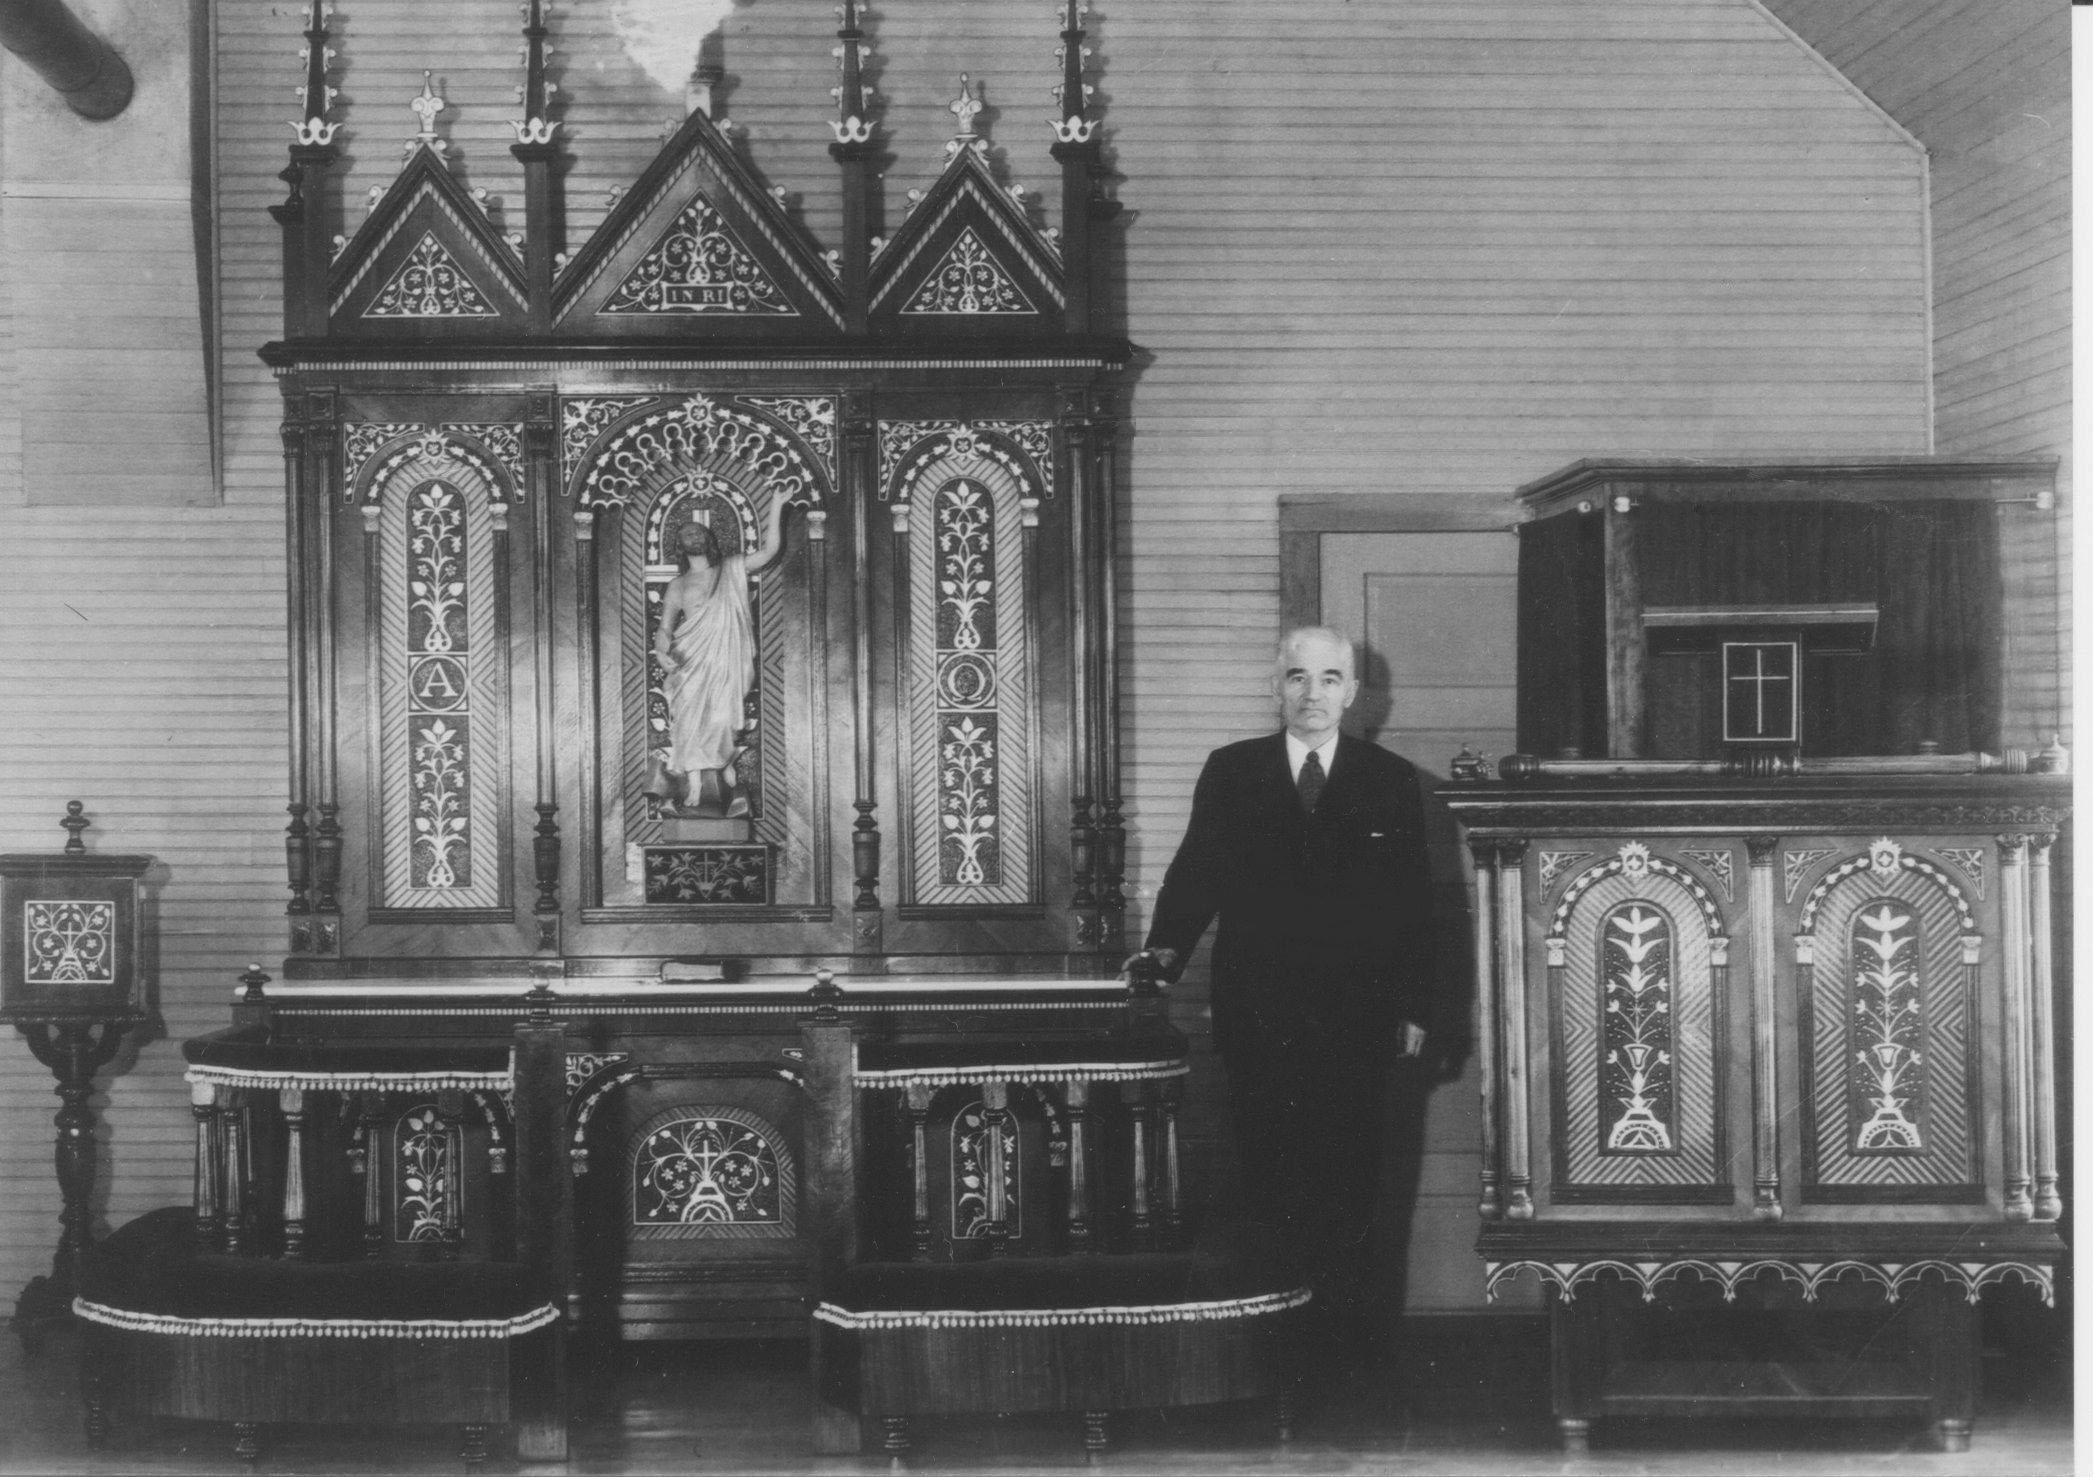 Johann Franzman's third altar